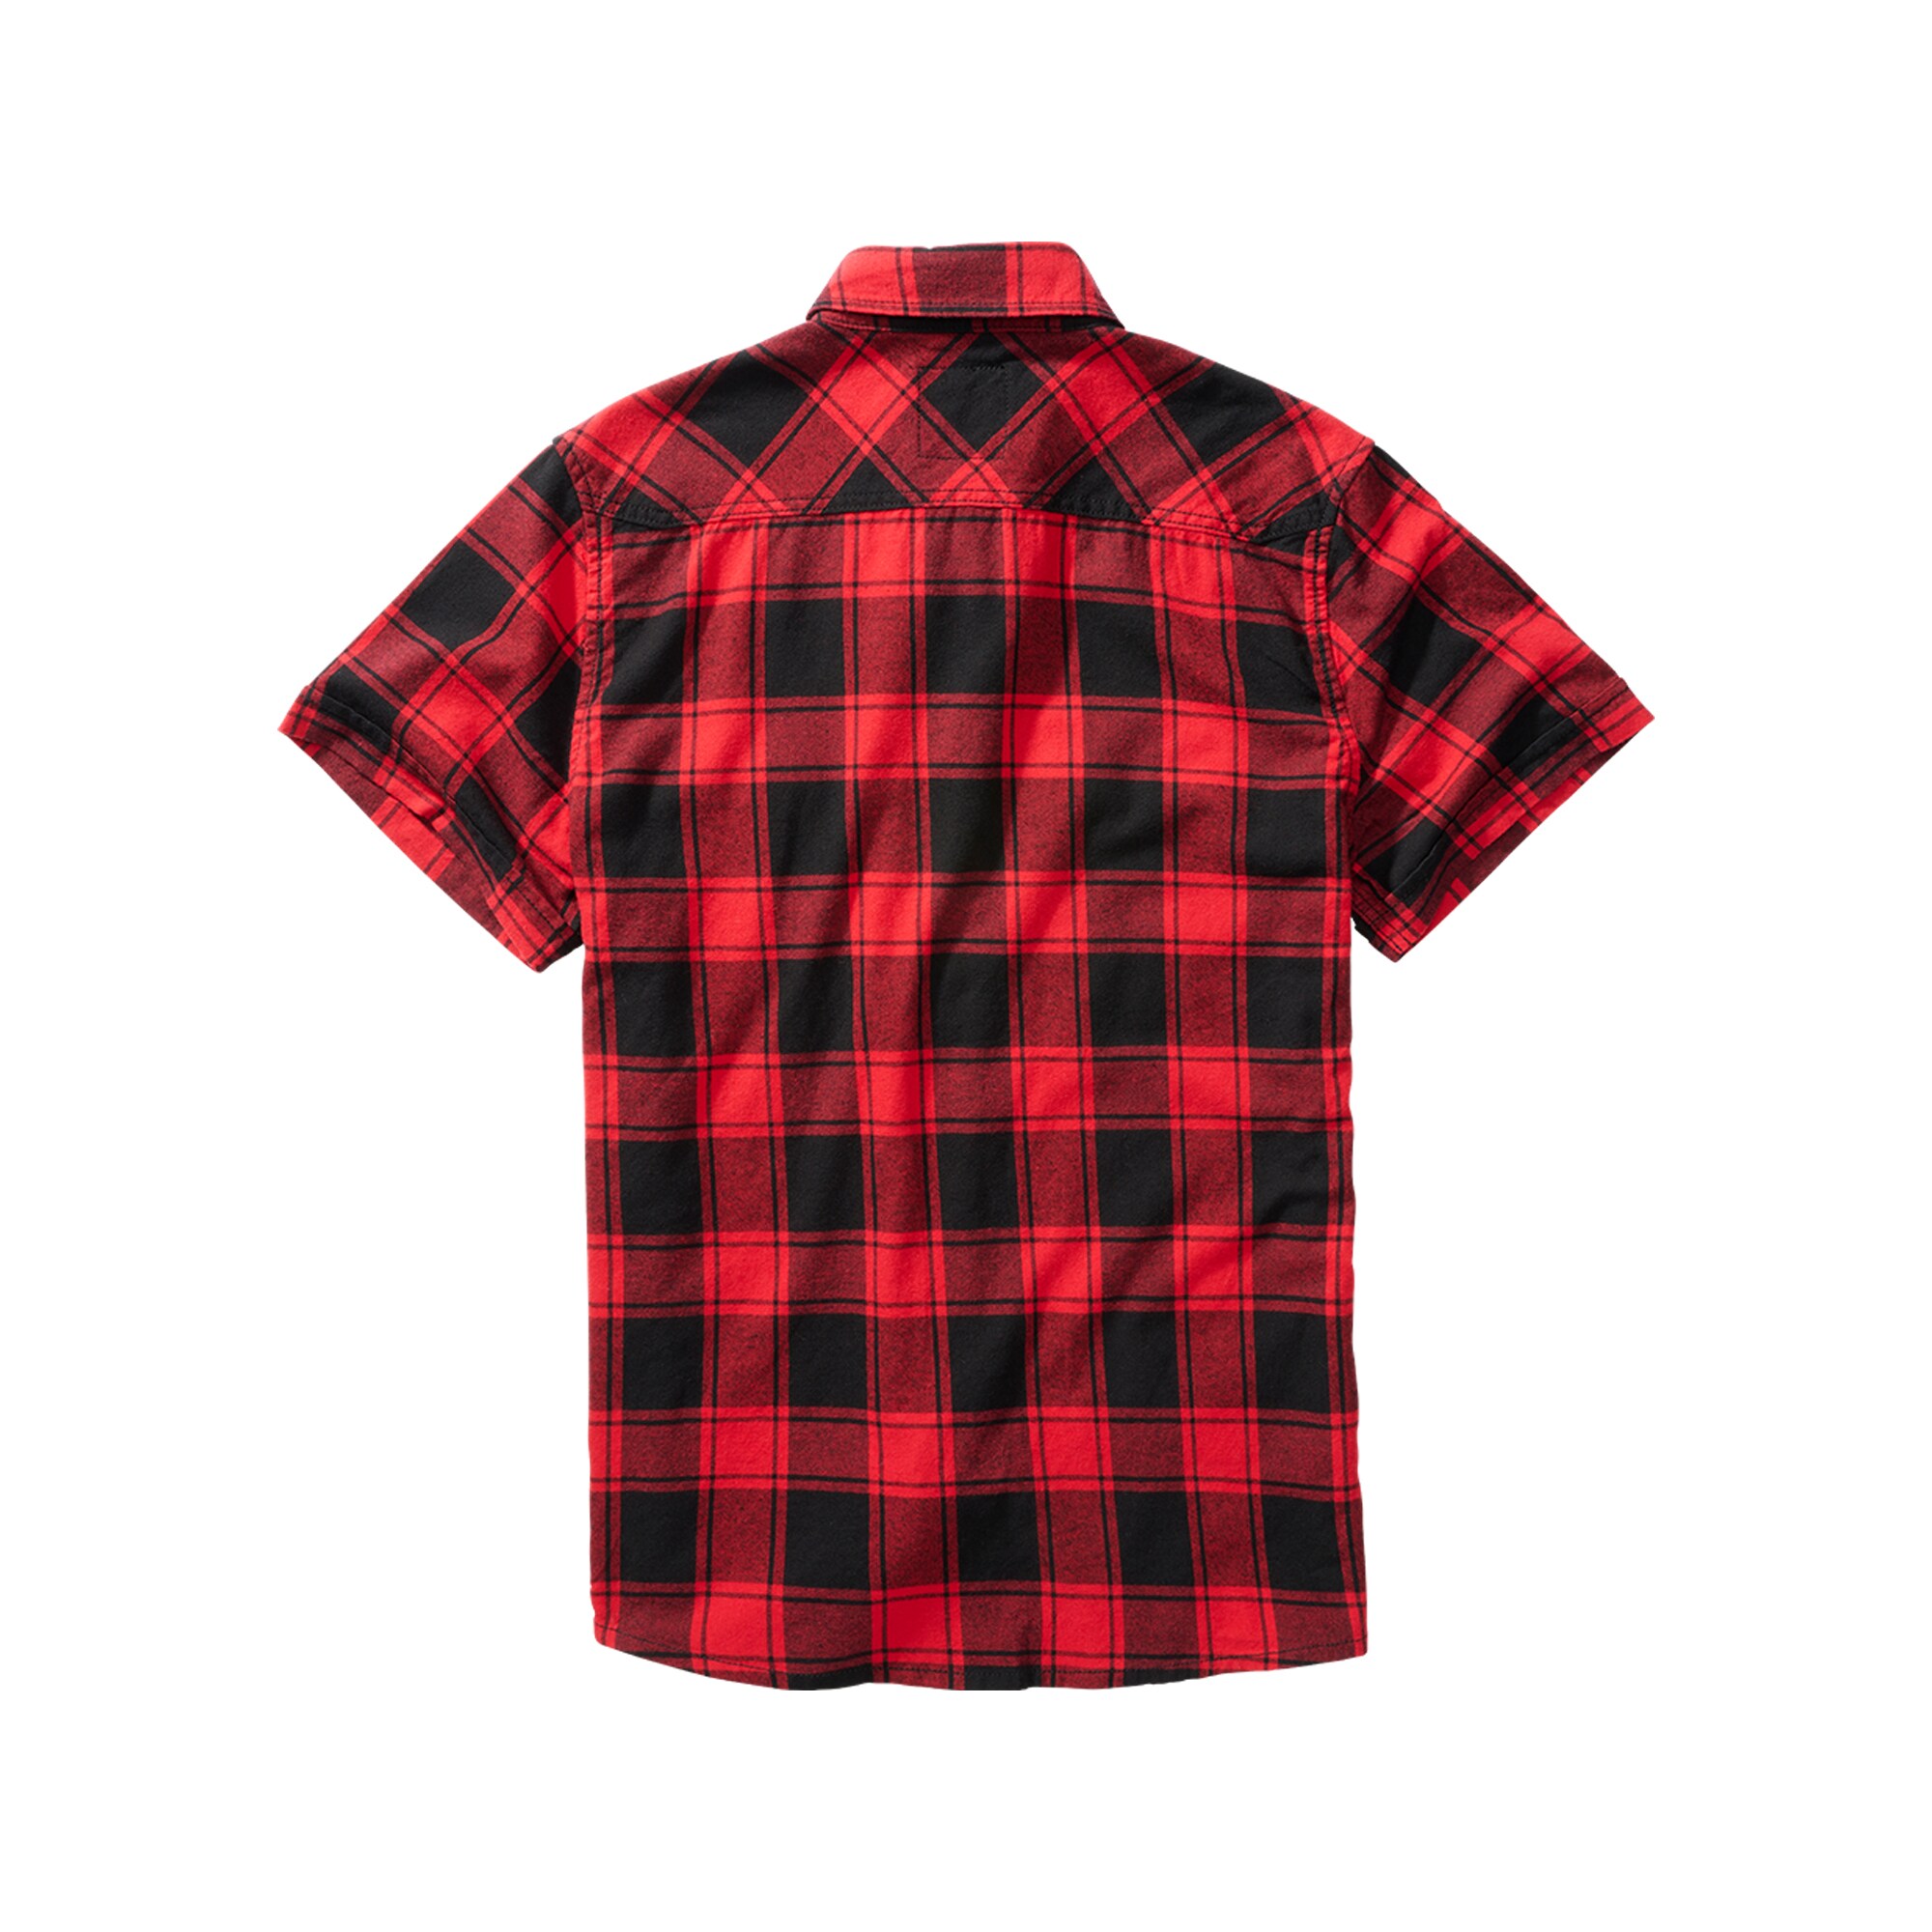 Purchase the Brandit Check Shirt ASMC Half Sleeve red/black by